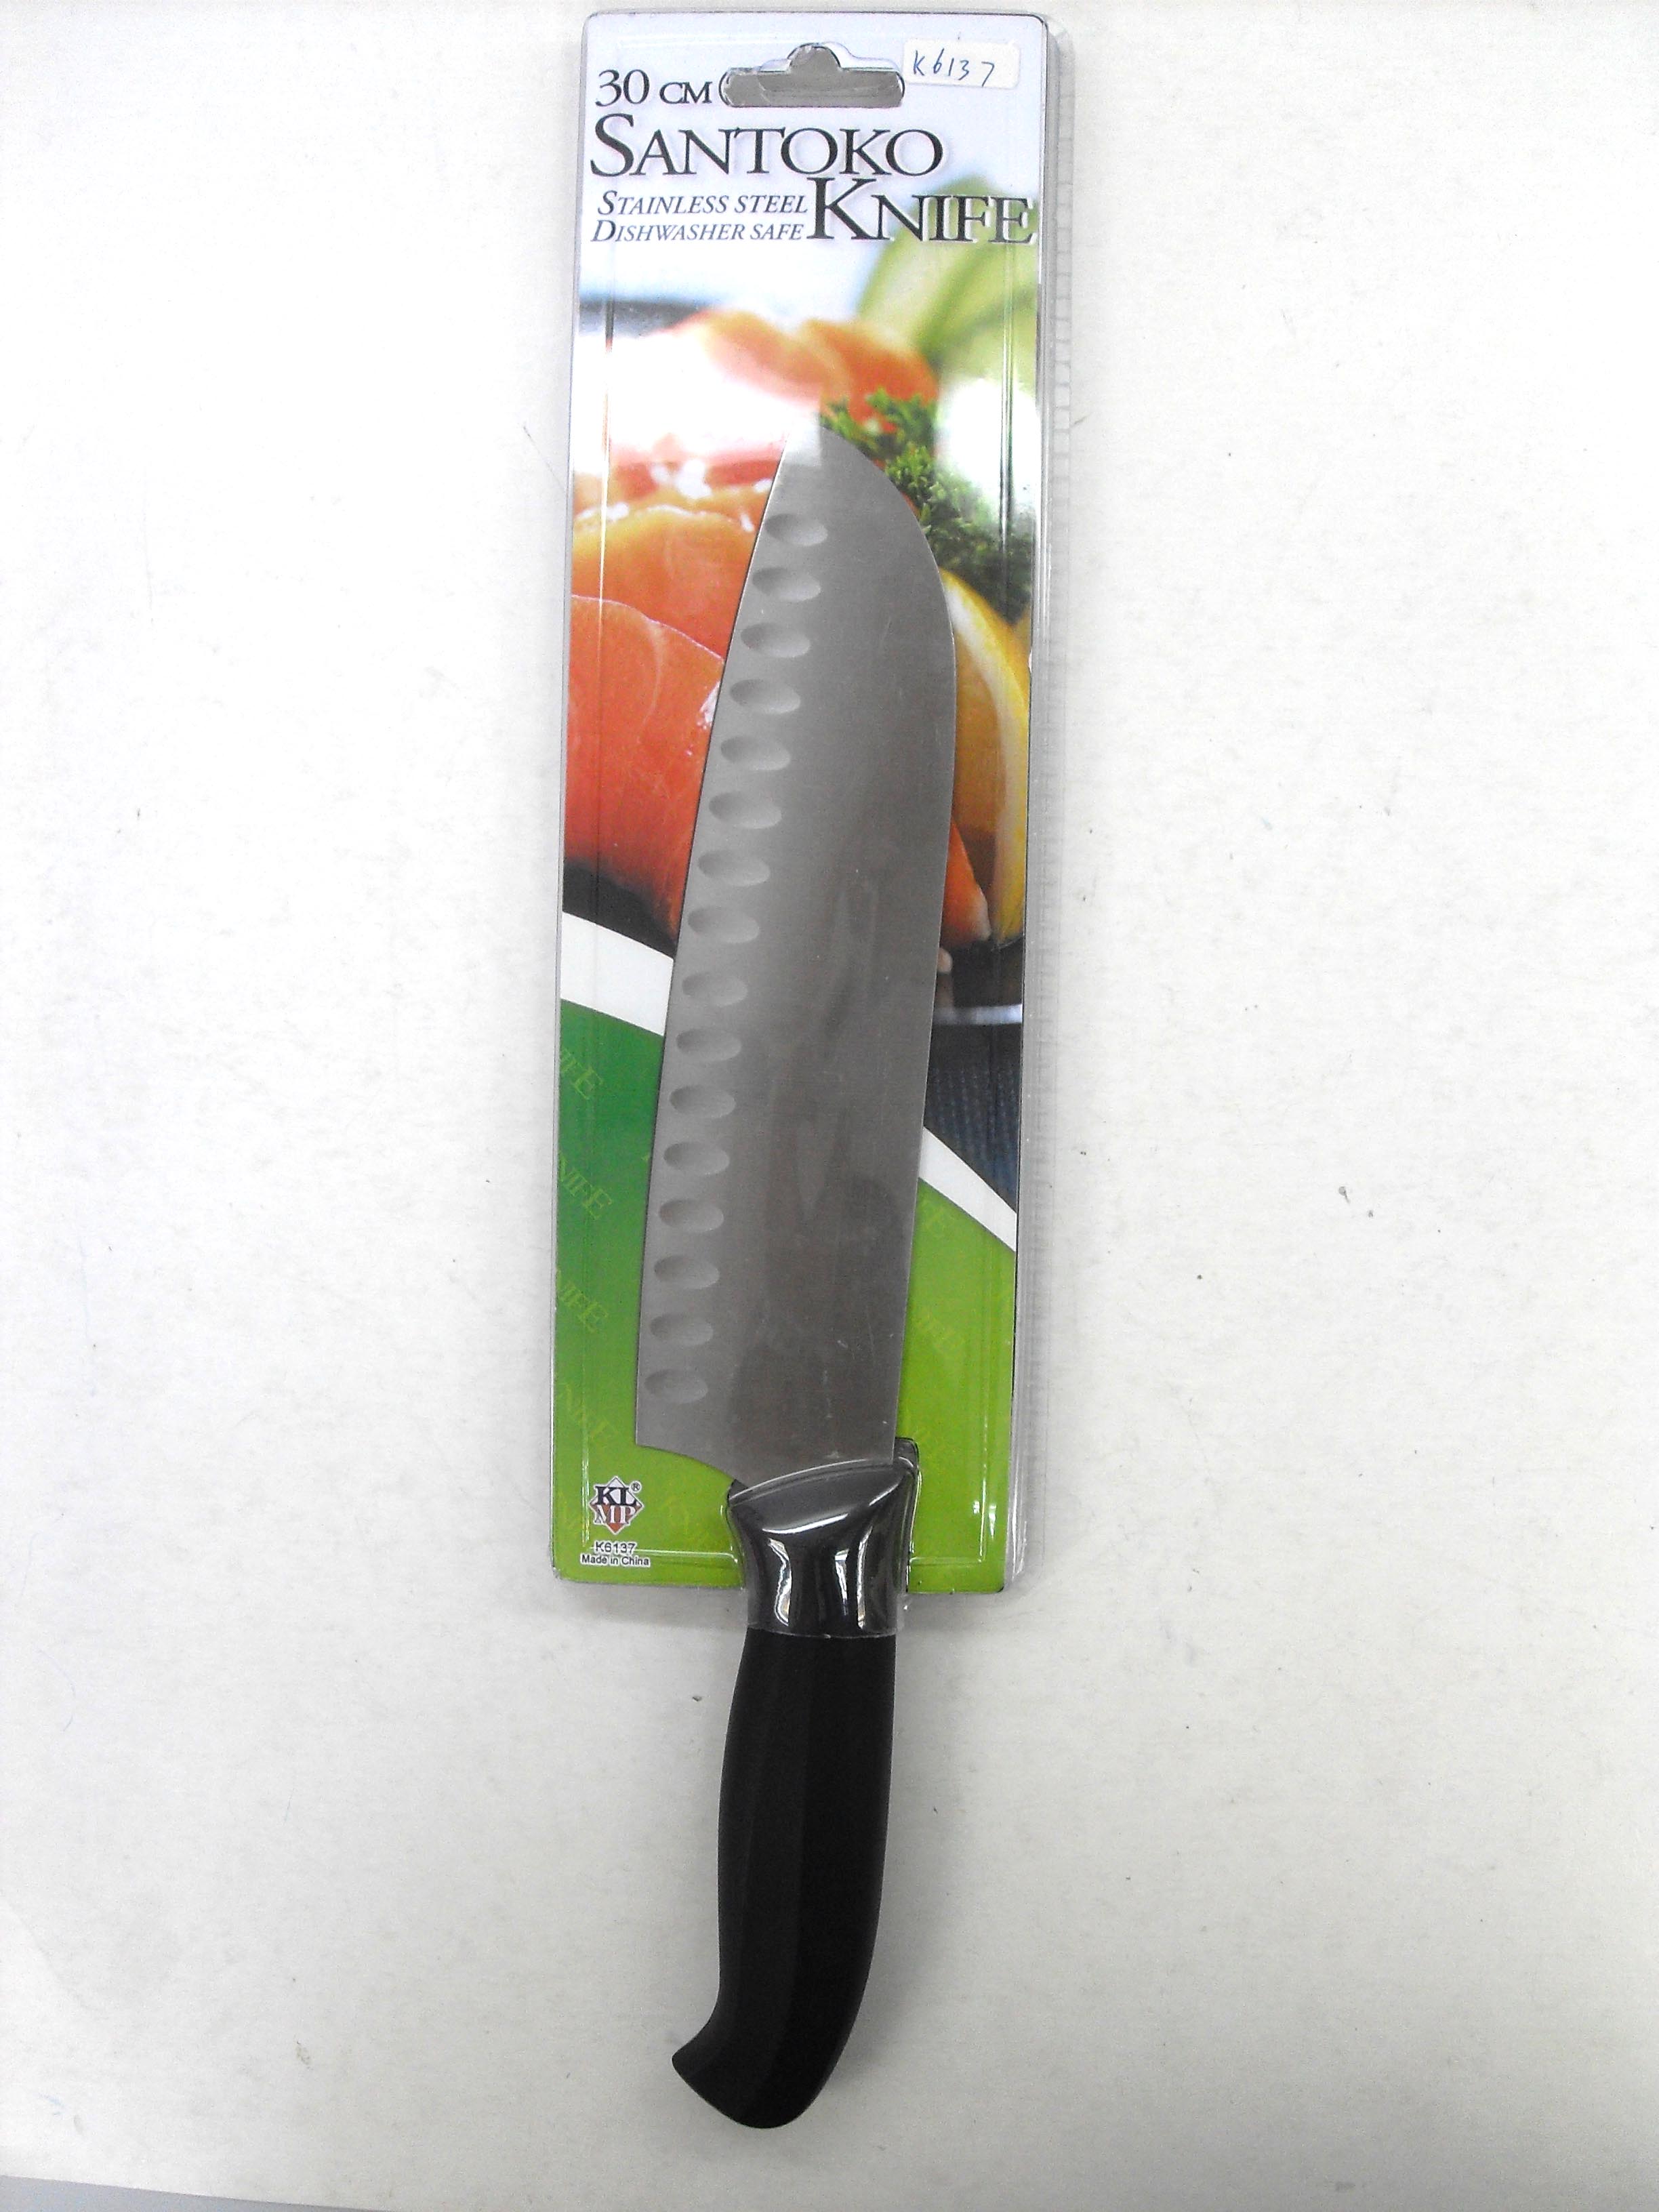 K6137 SANTOKO KNIFE